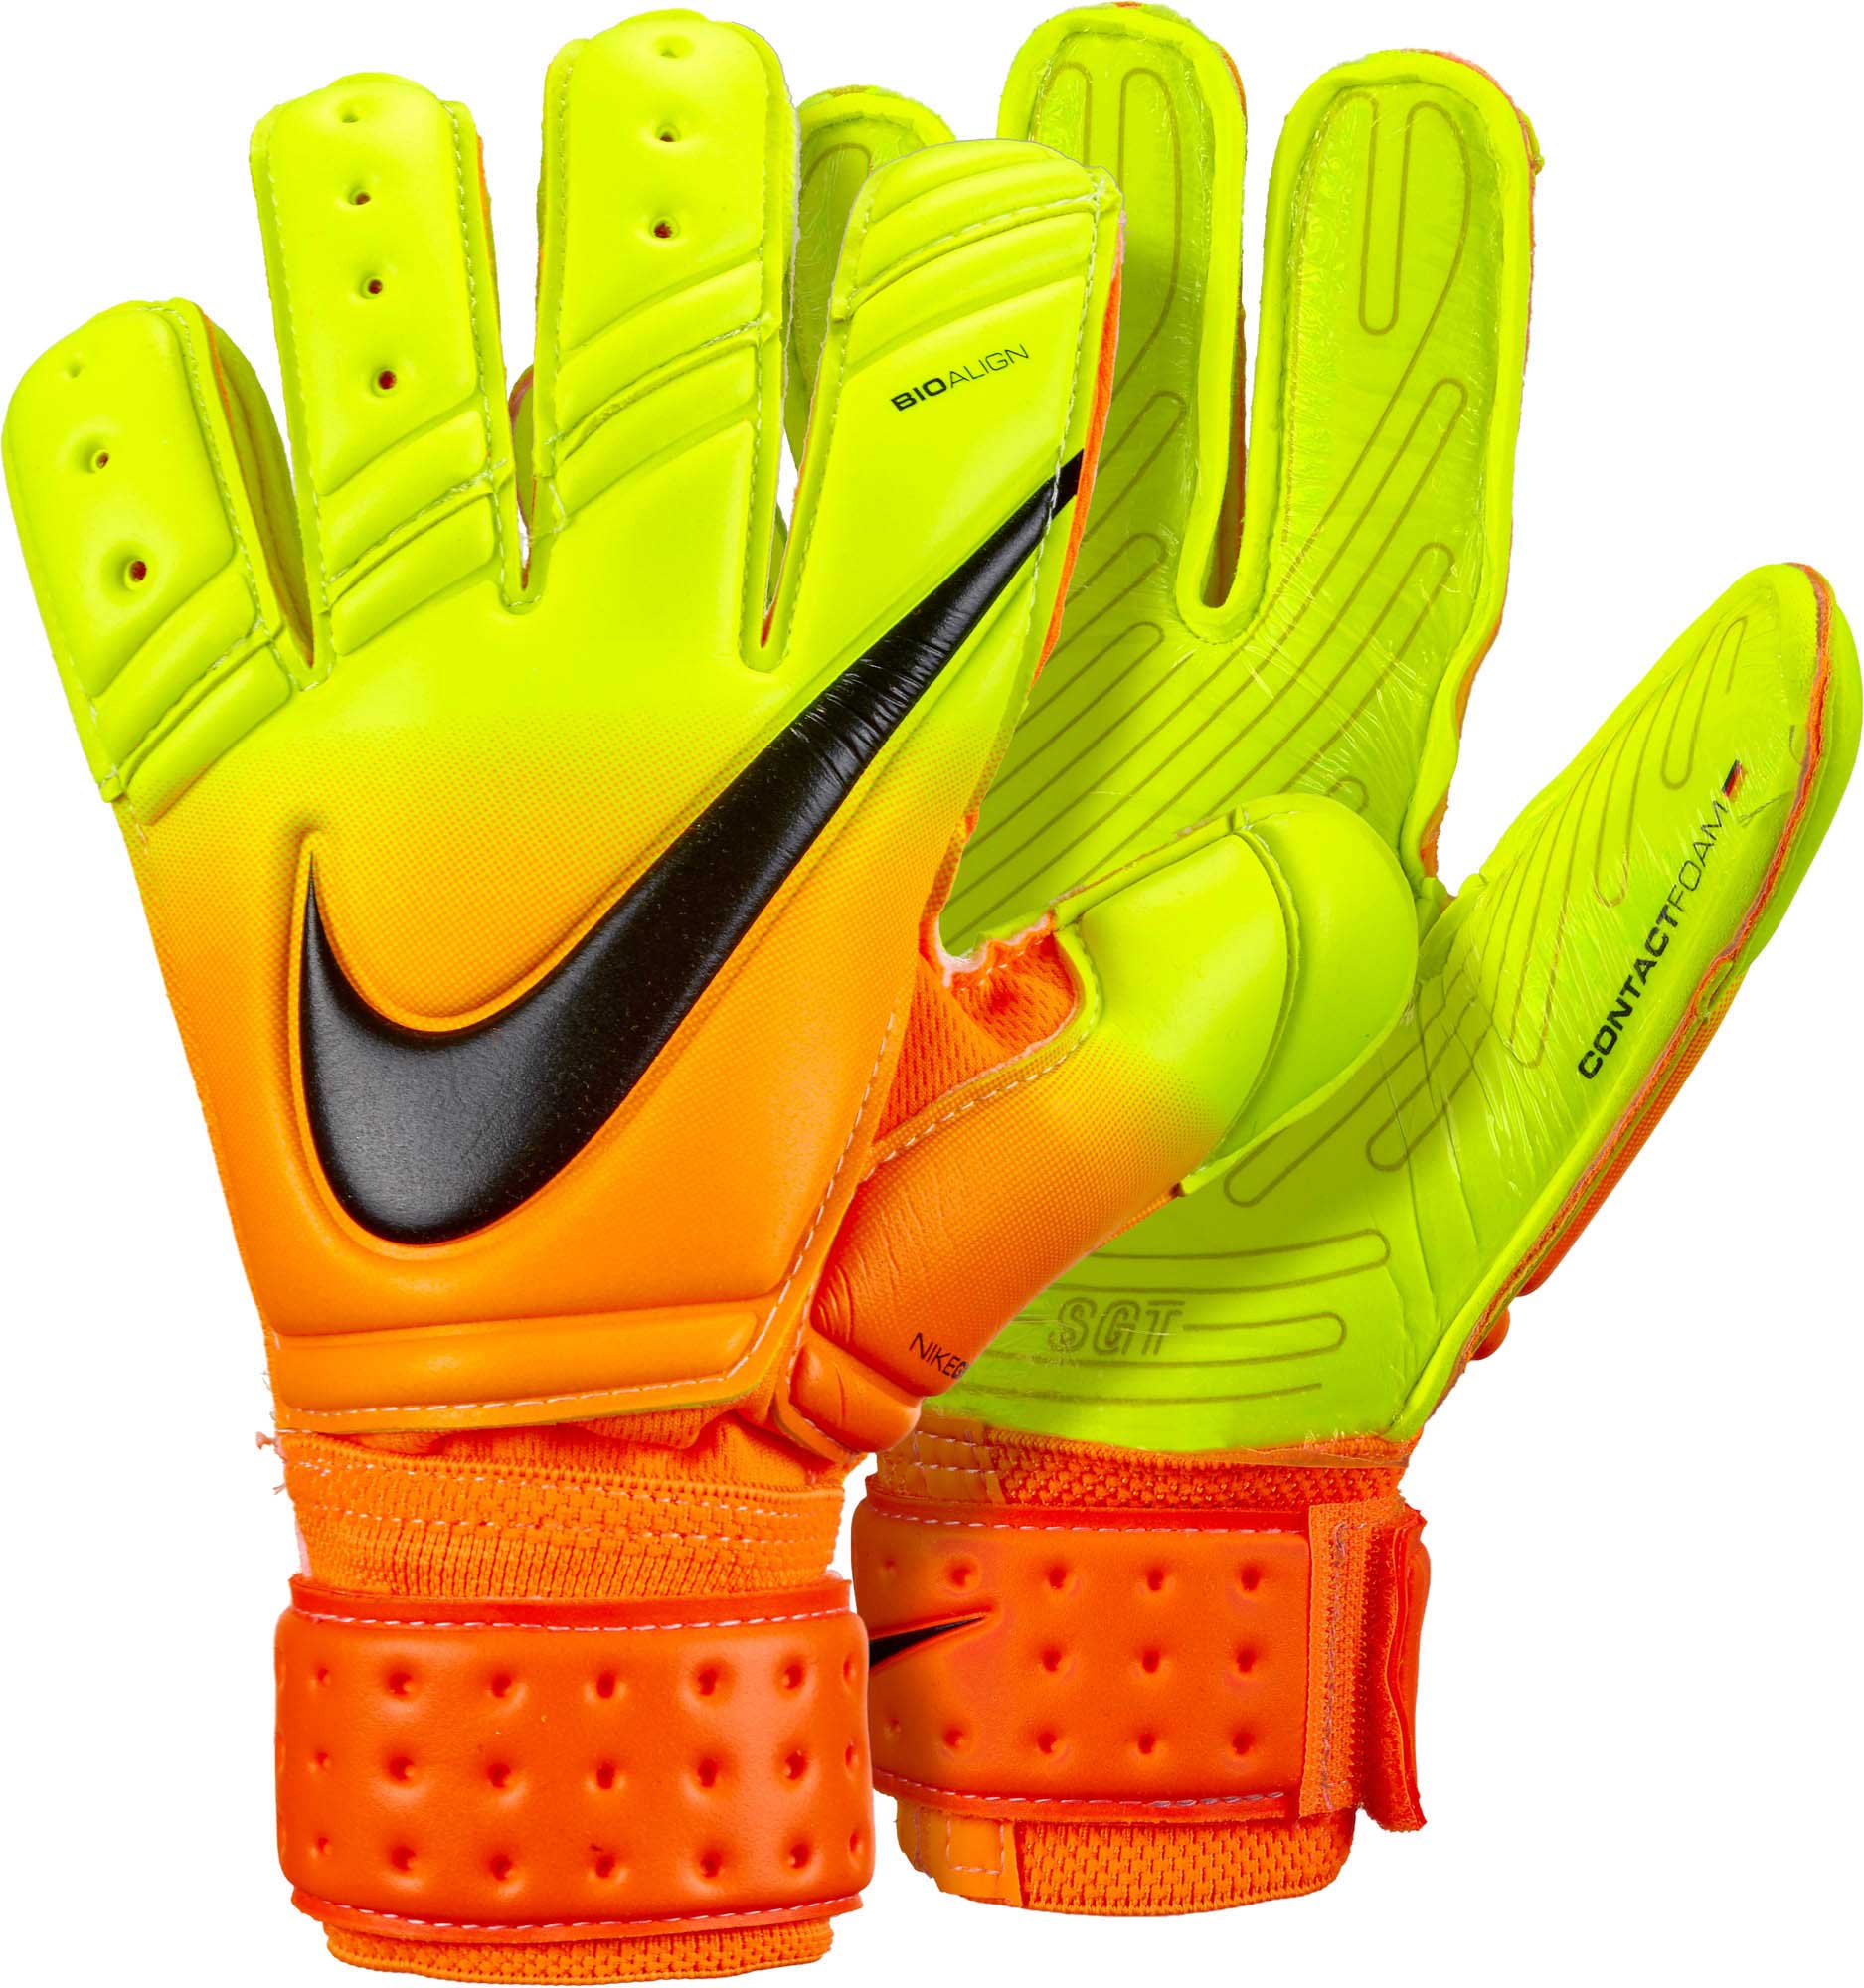 Voorlopige naam Postbode wasserette Nike Premier SGT Goalie Gloves - Orange GK Gloves